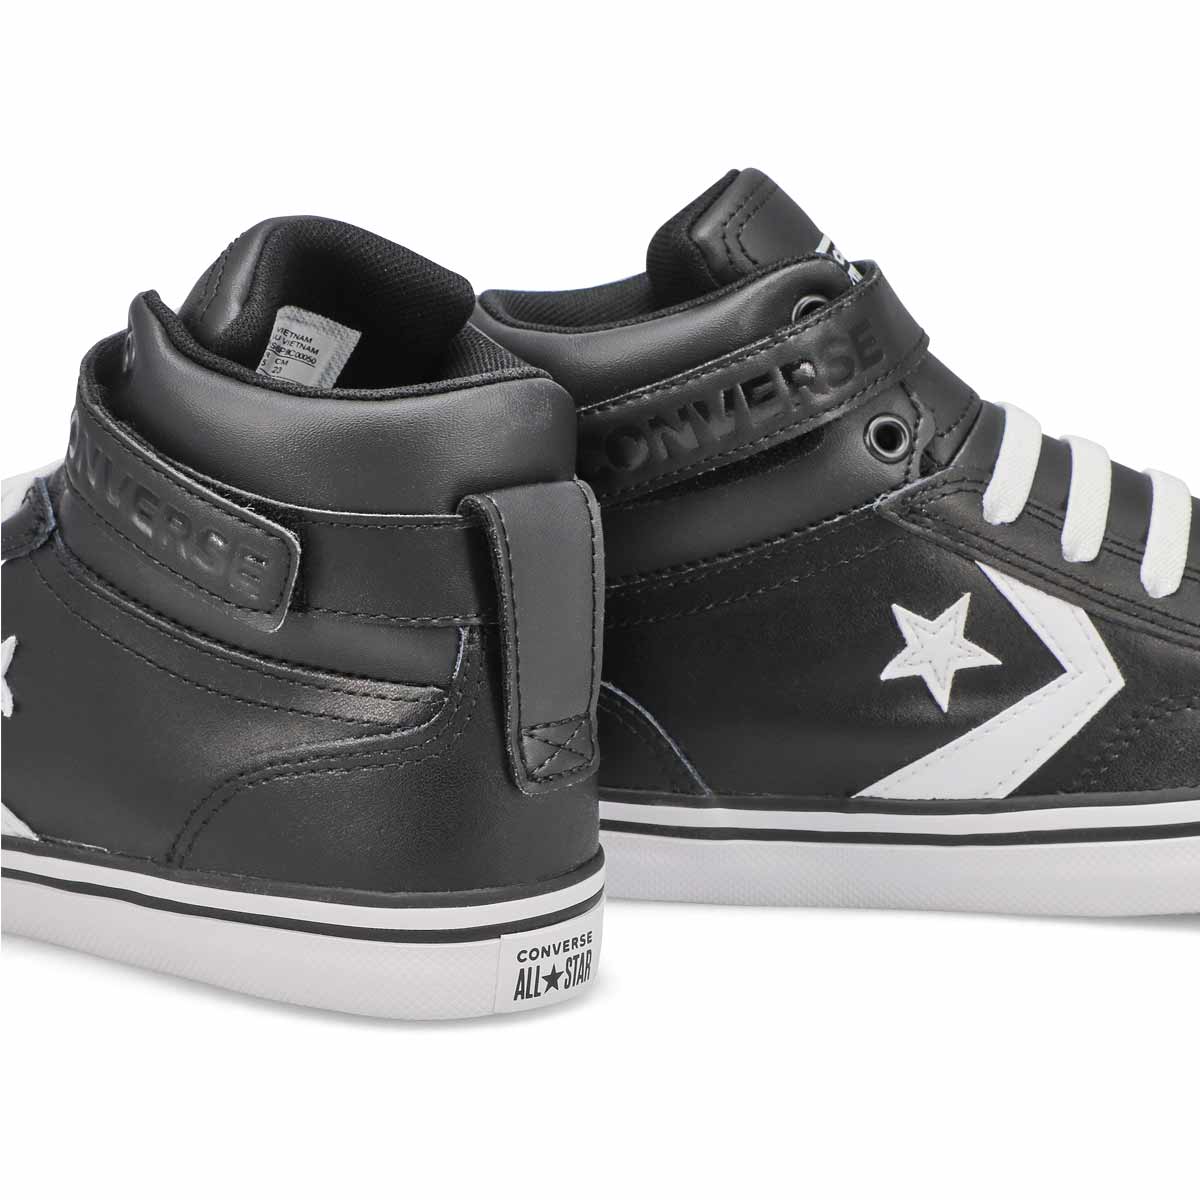 Boys' Chuck Taylor All Star Pro Blaze Strap Leather Sneaker - Black/White